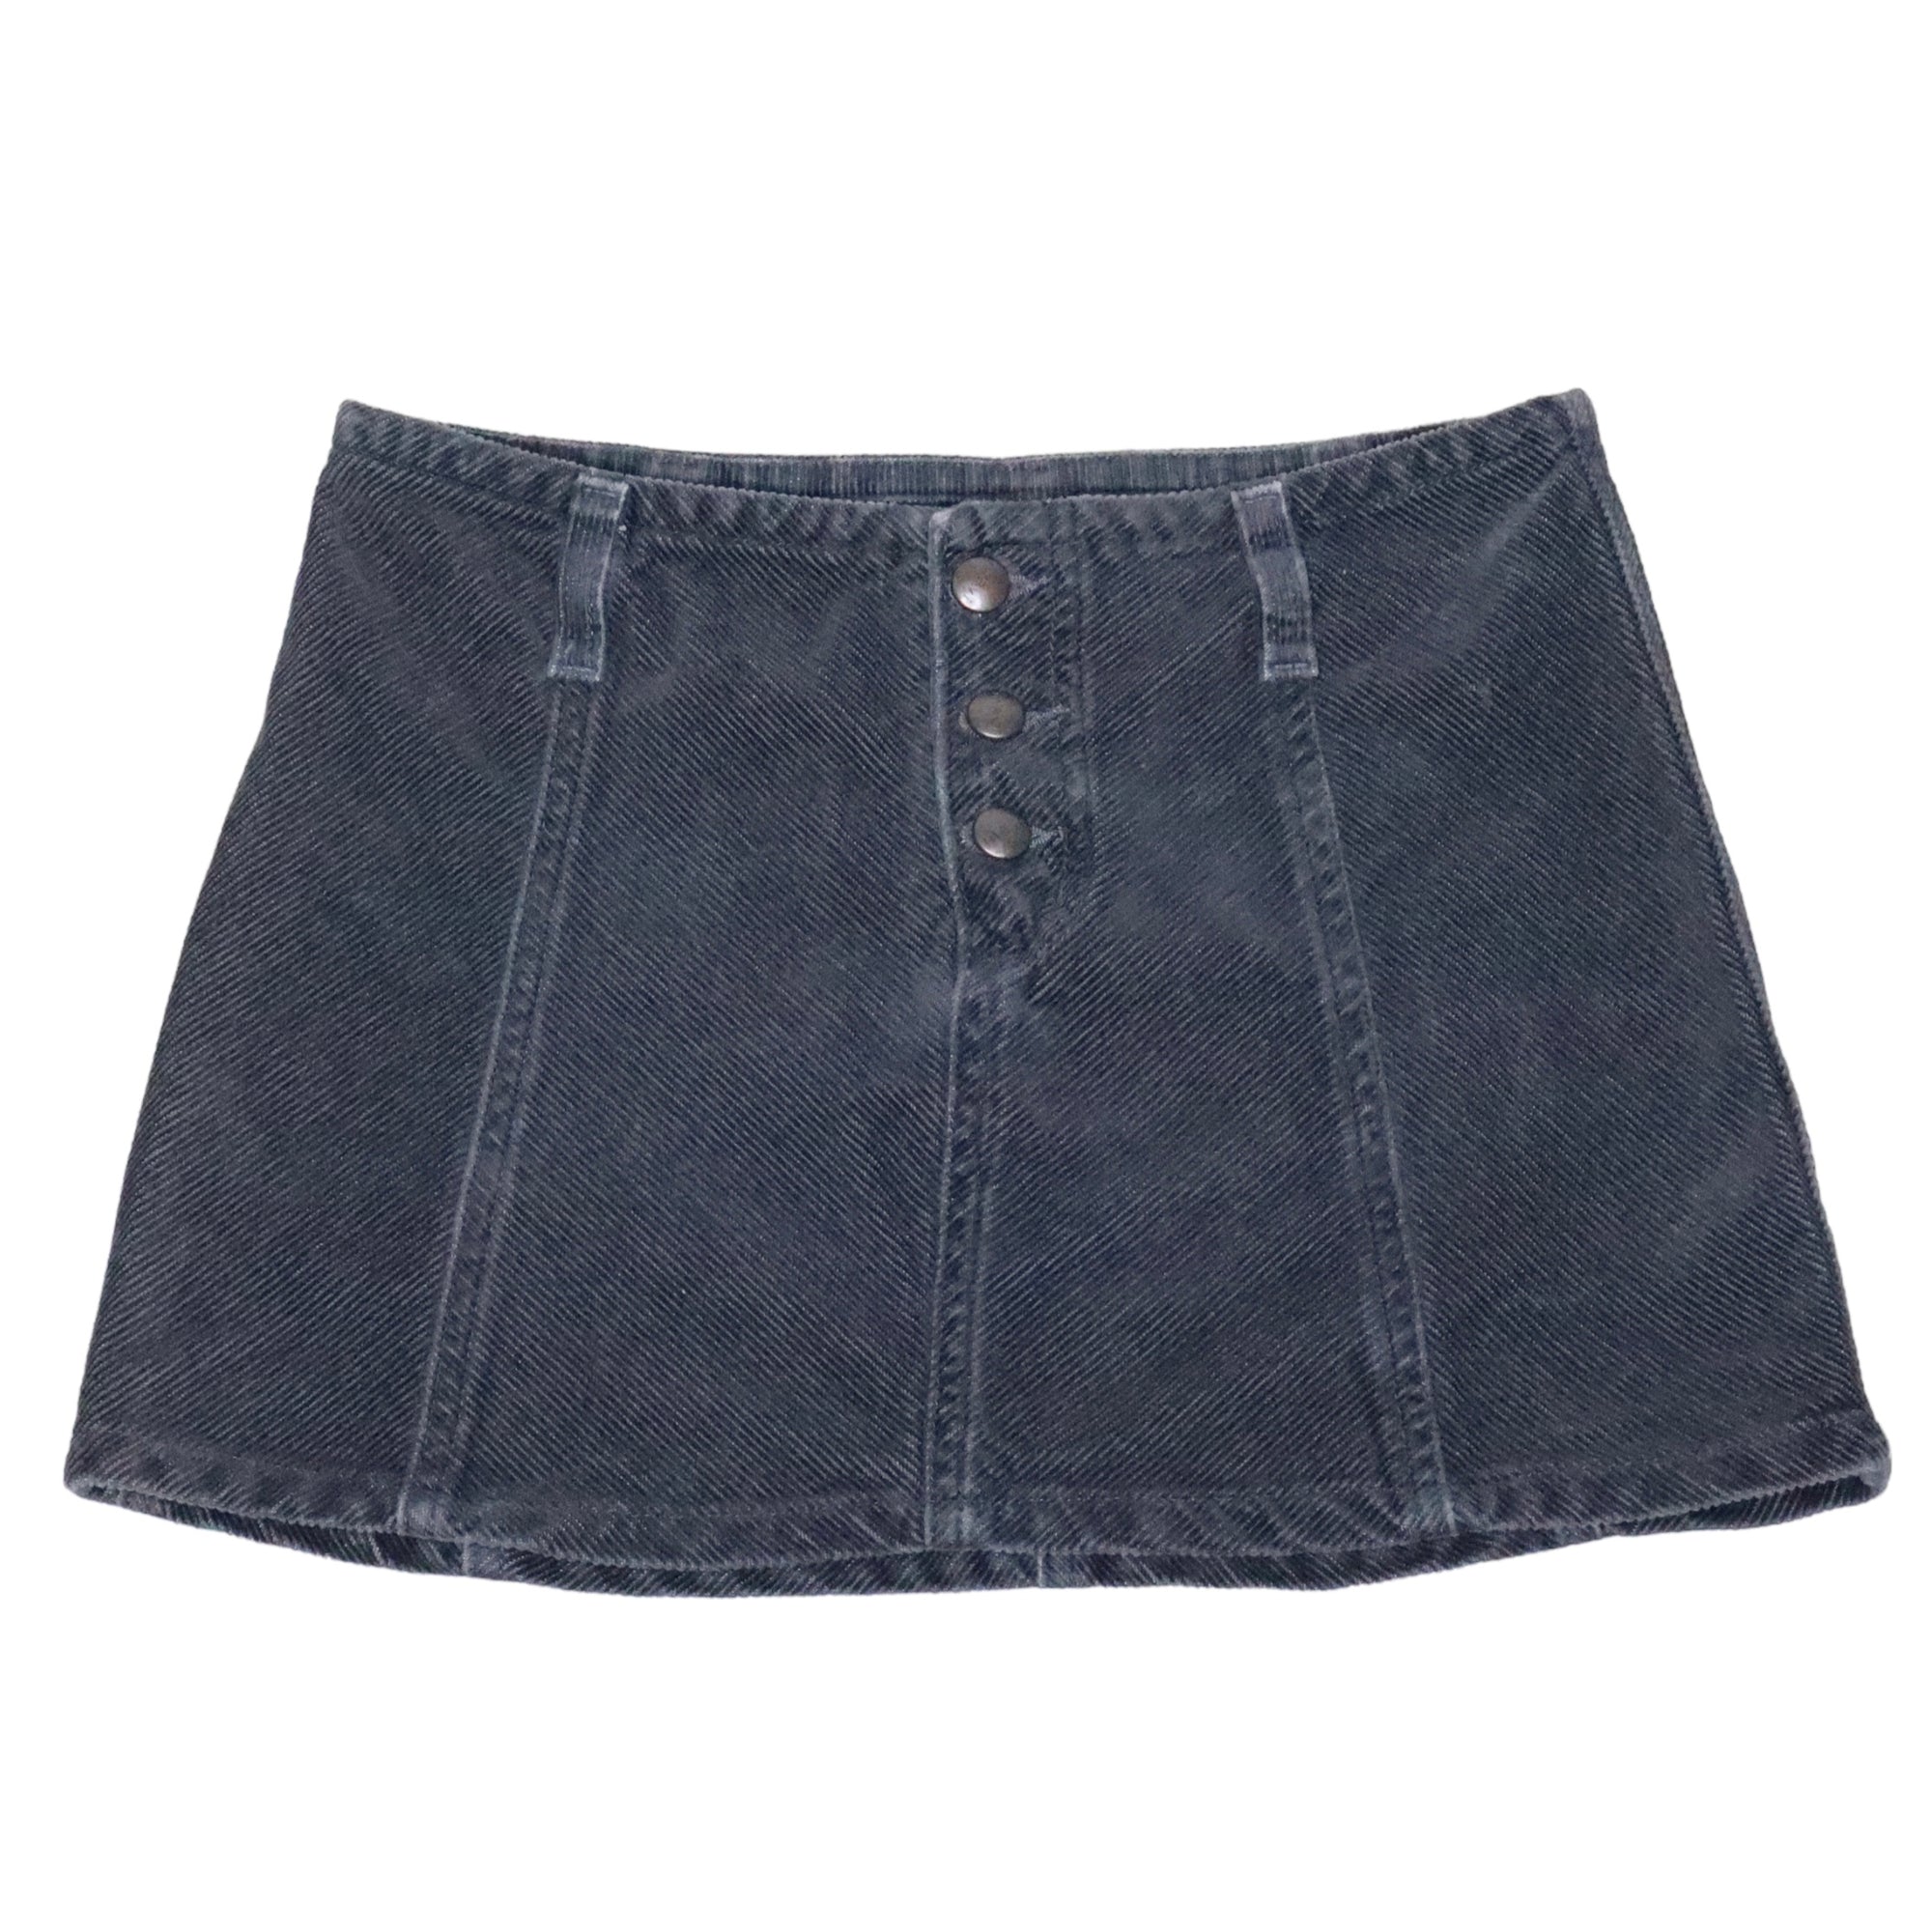 Slate Gray Corduroy Mini Skirt (XS)